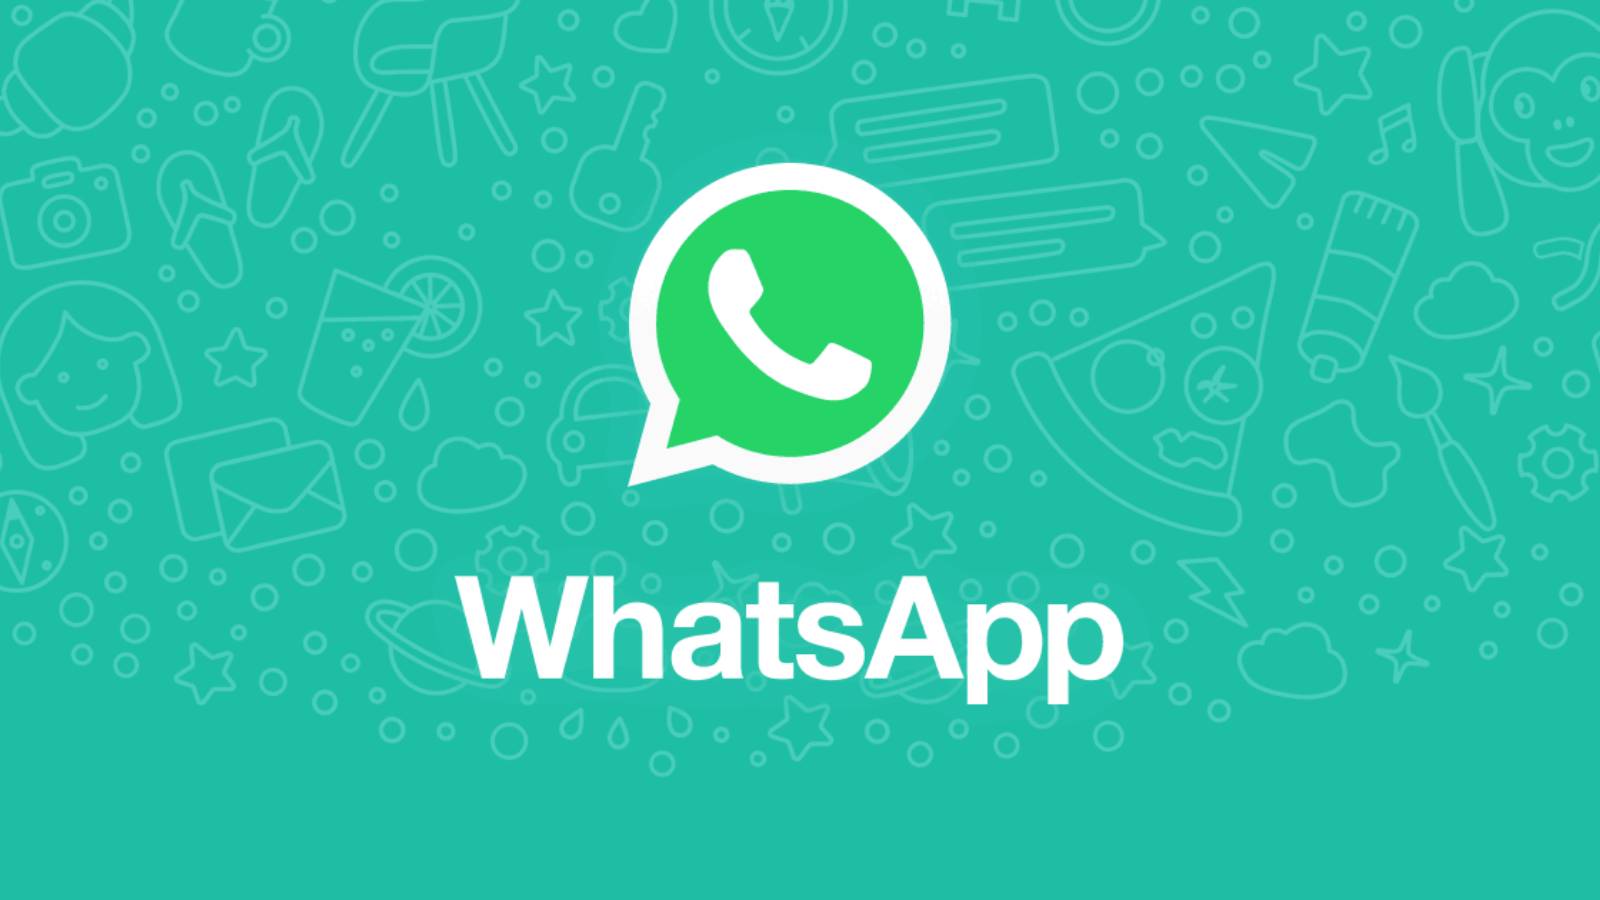 WhatsApp luovuus